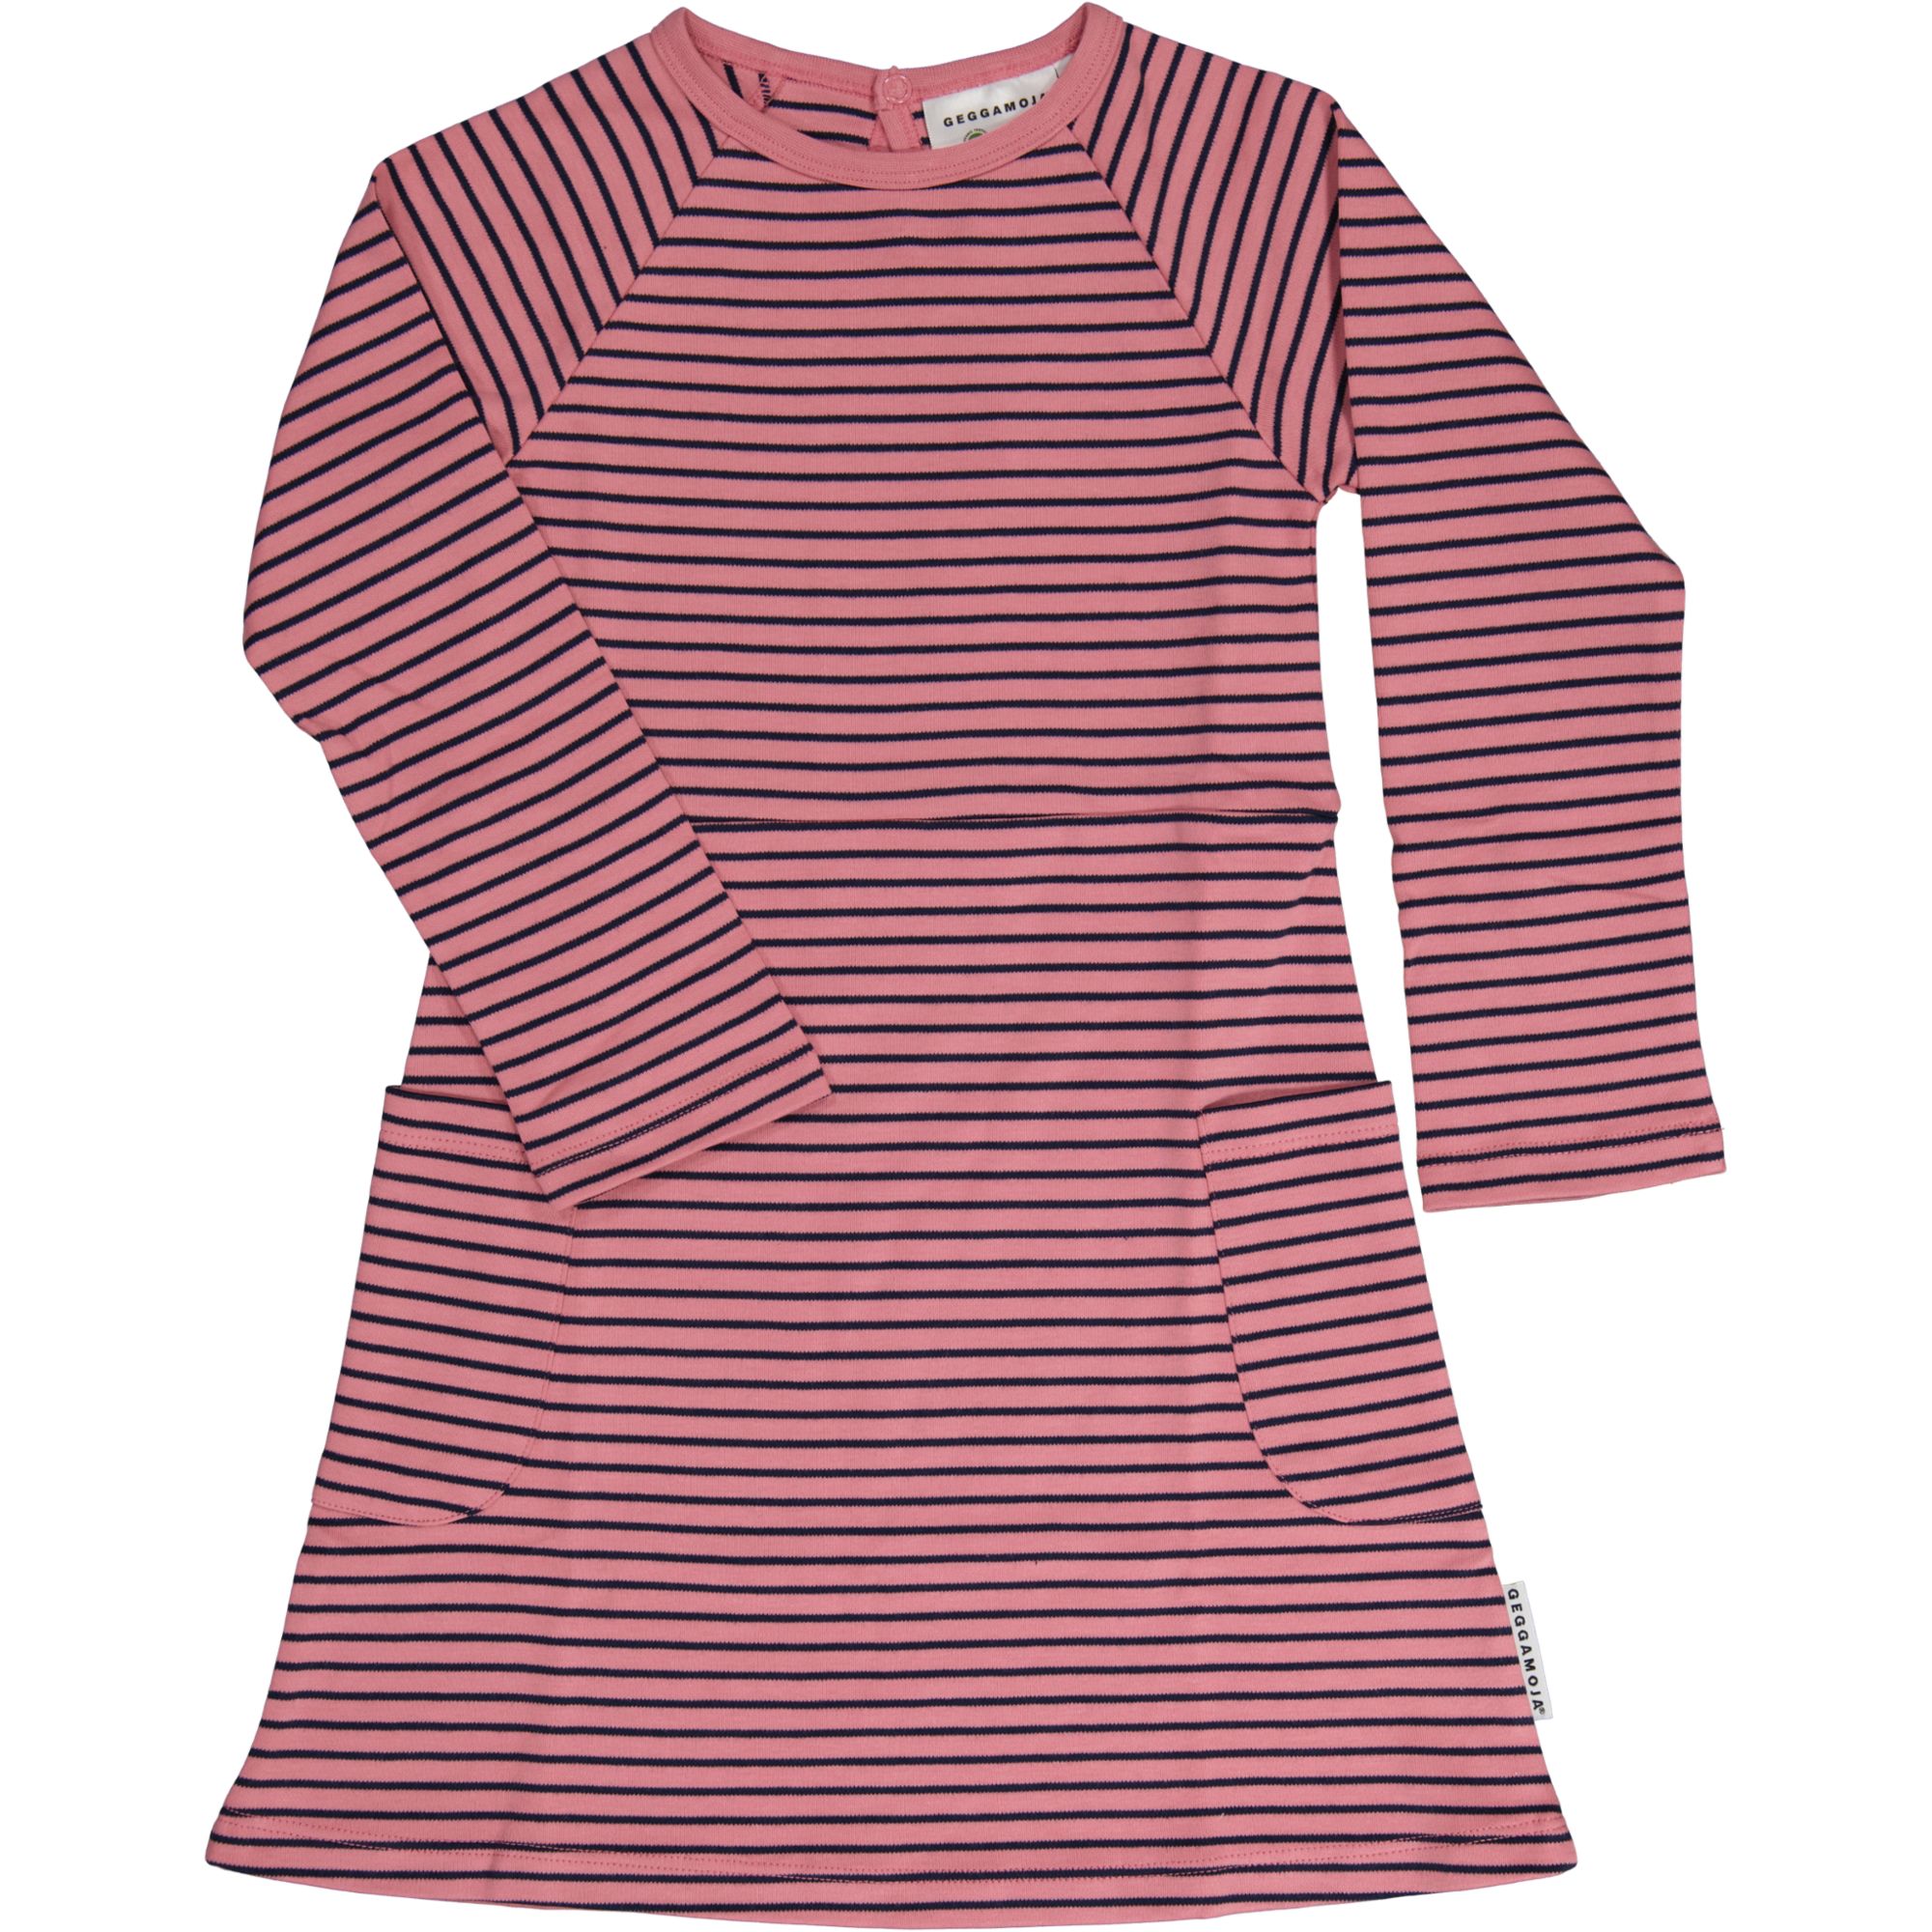 Pocket dress Pink/navy